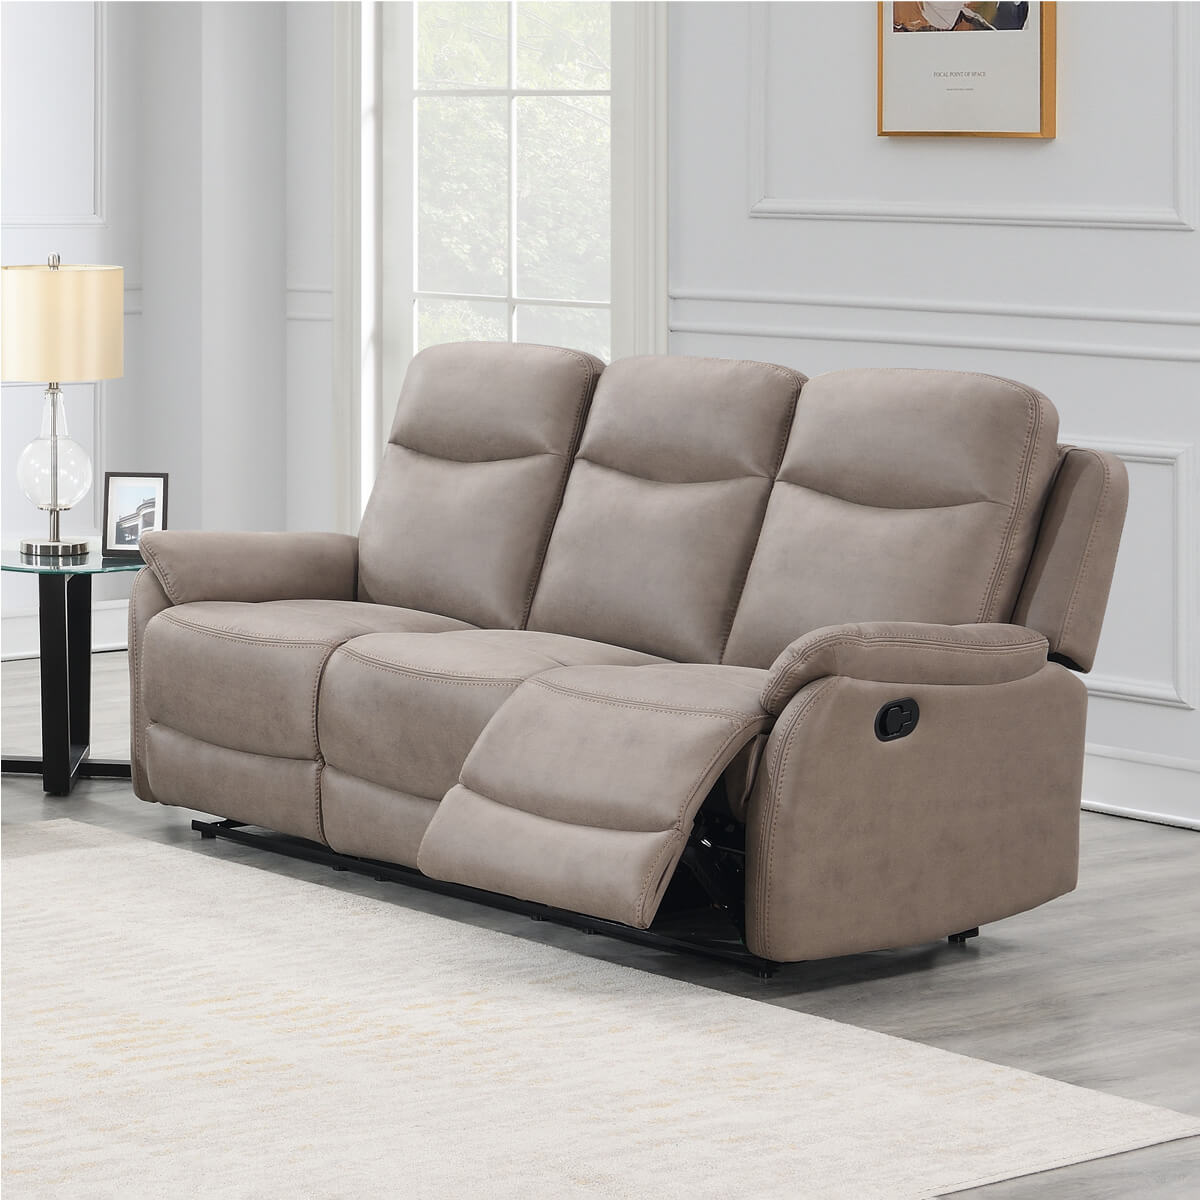 Evander 3 Seater Sofa - Taupe